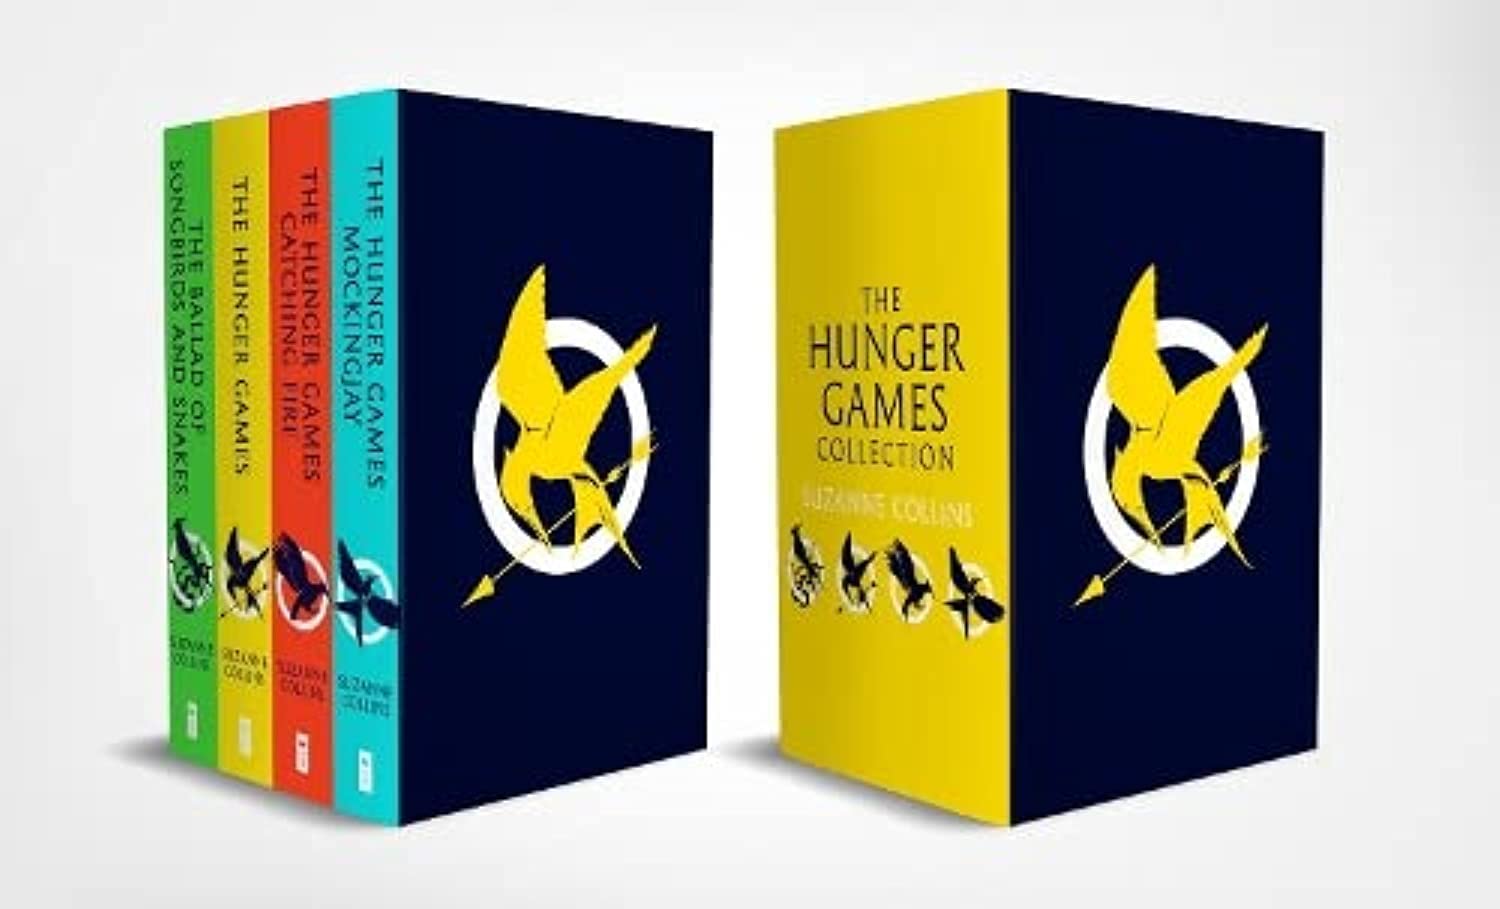  Hunger games t1 collector t.1 - Suzanne Collins - autres  livres - Livres pas cher - Neuf et Occasion